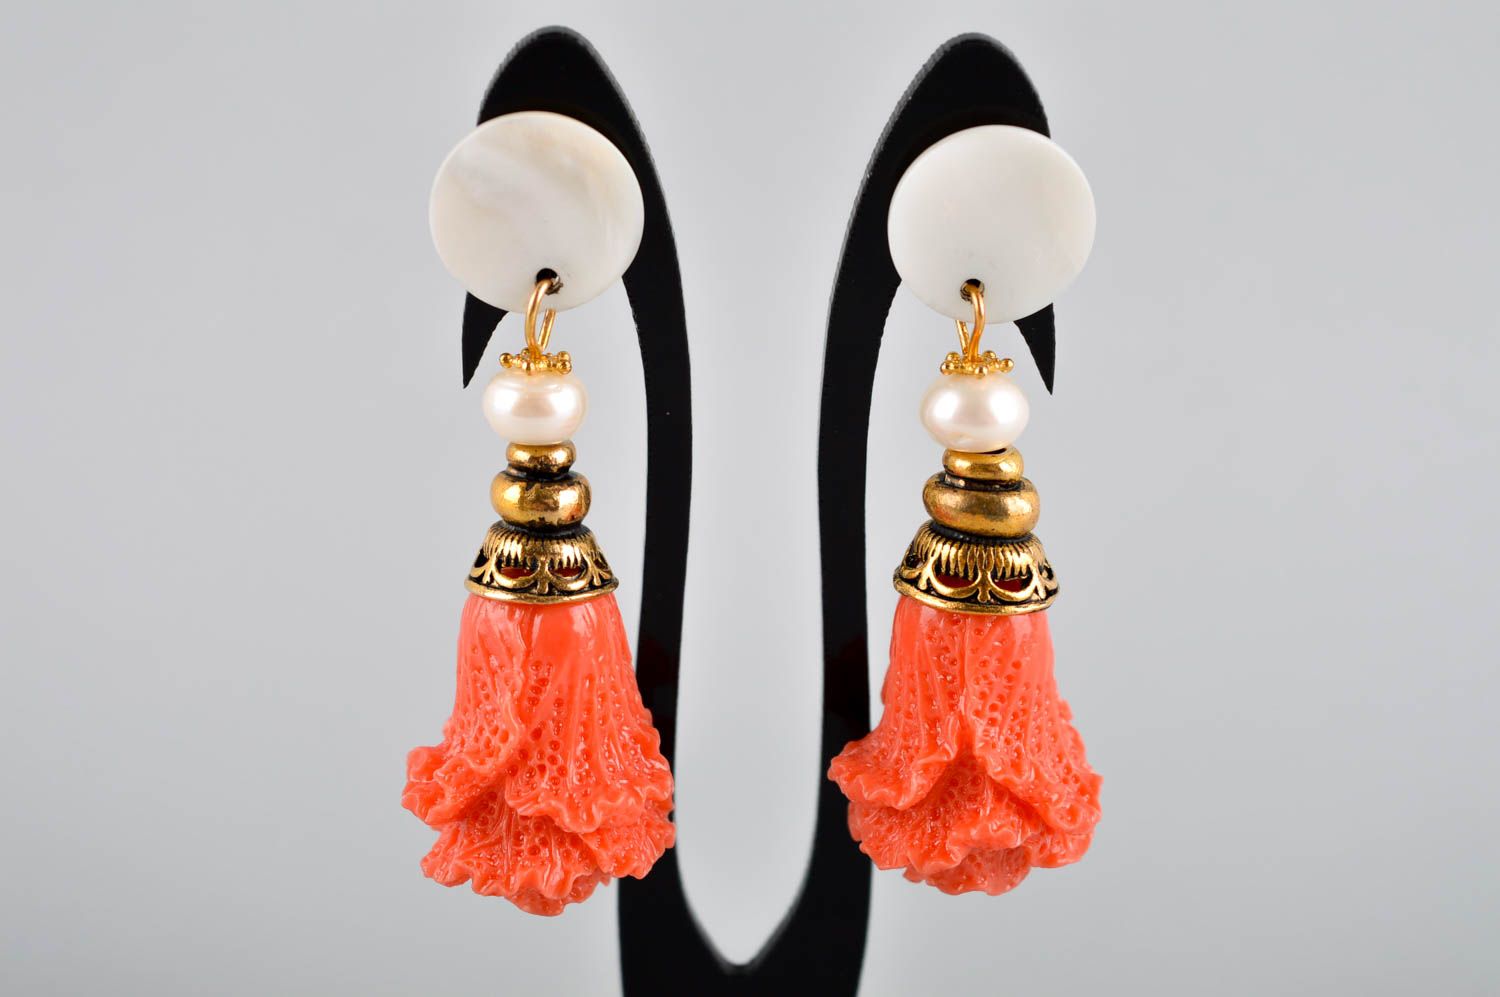 Handmade flower earrings metal earrings with charms handmade metal jewelry photo 2